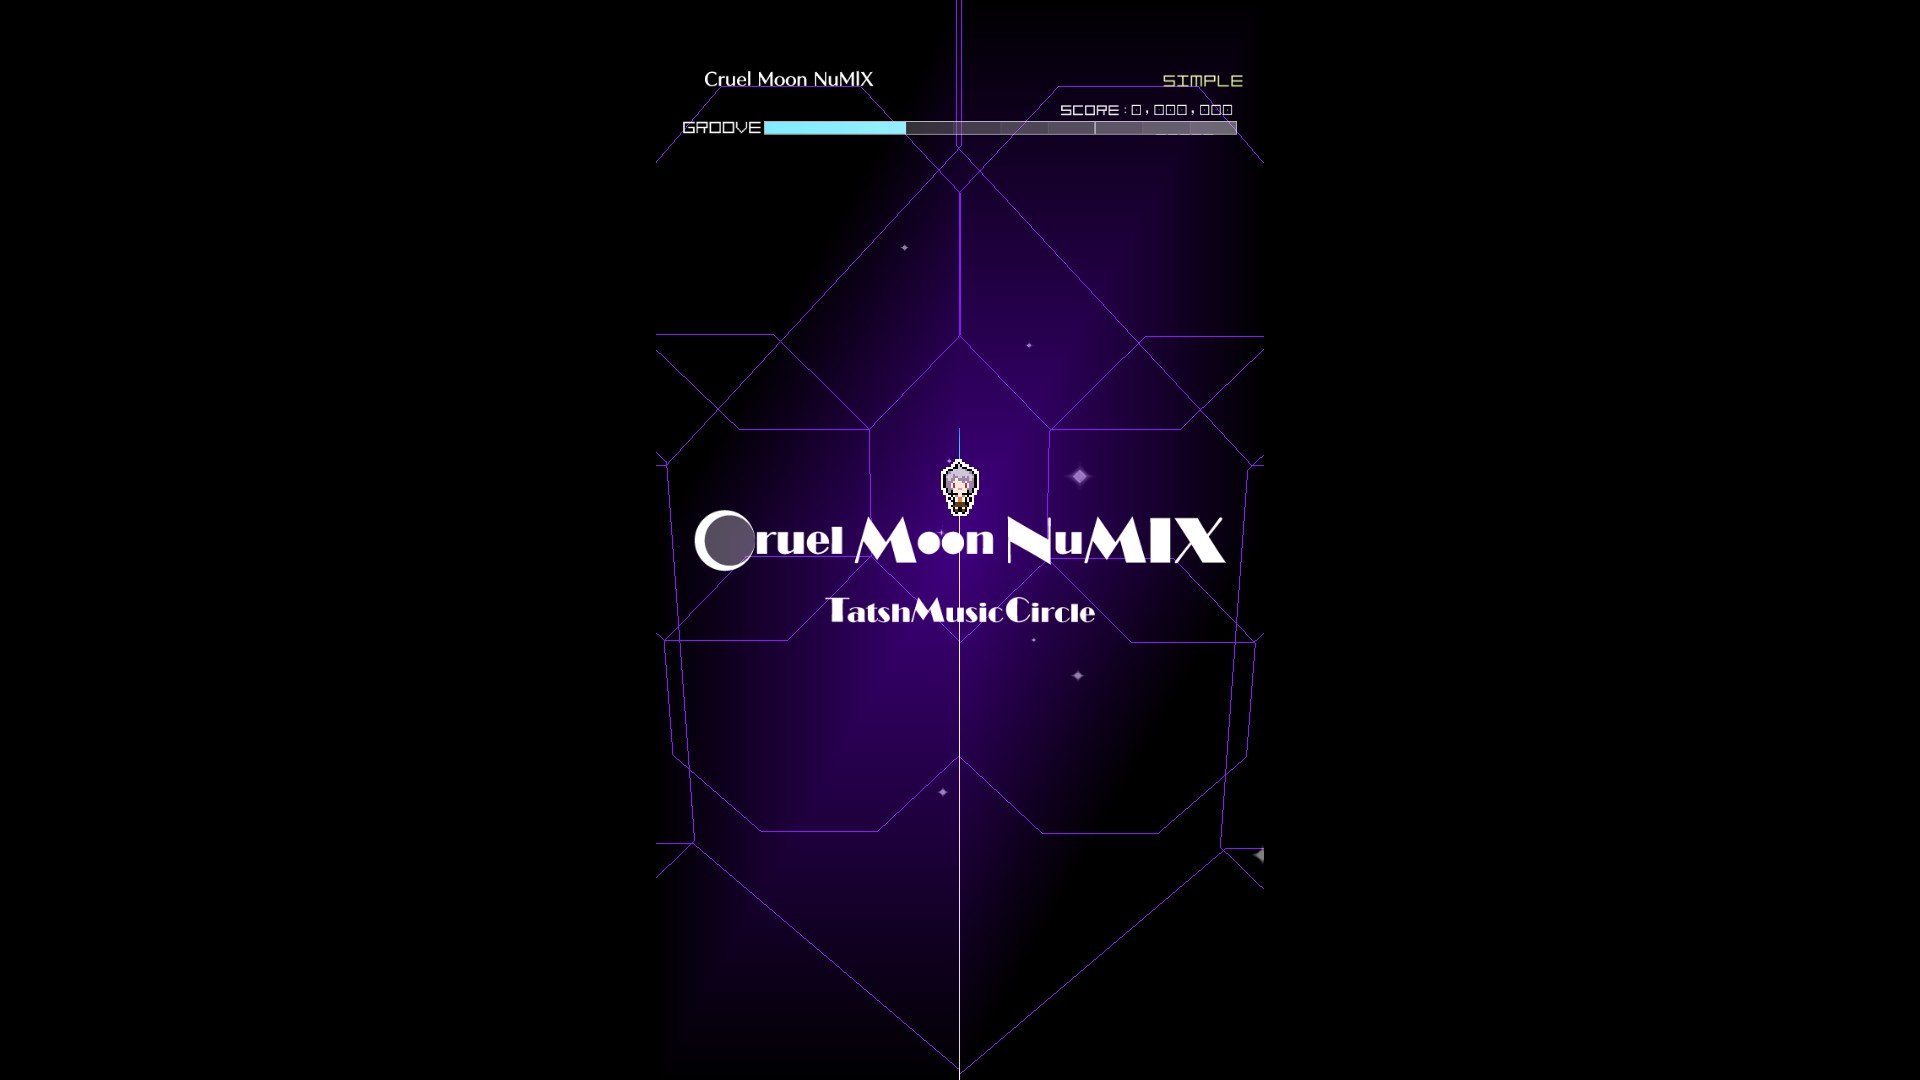 Groove Coaster - Cruel Moon NuMIX Featured Screenshot #1